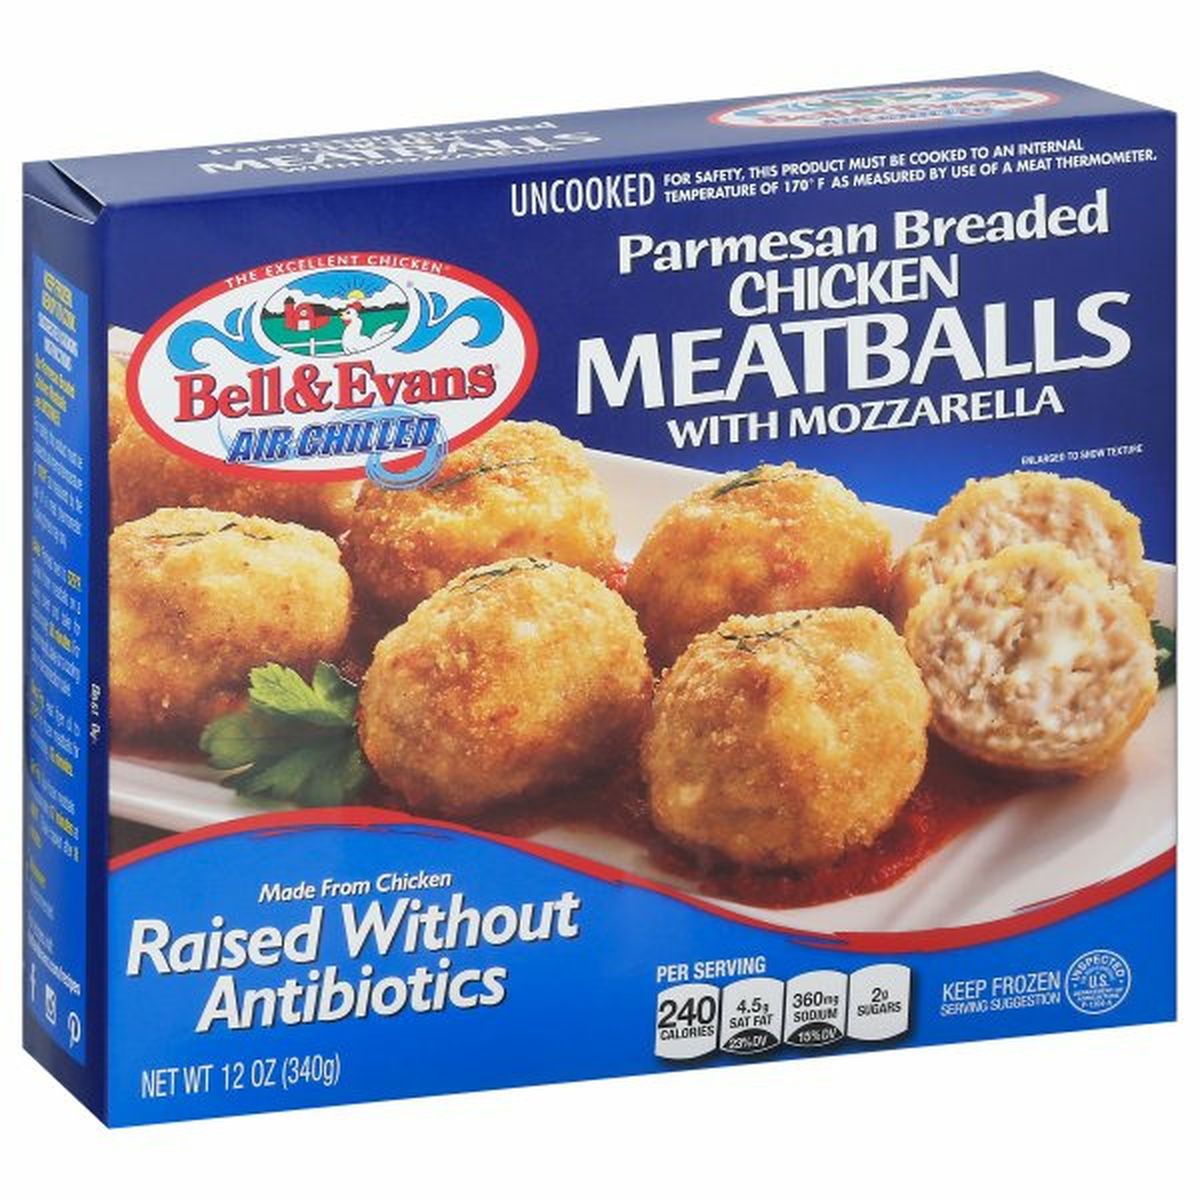 Calories in Bell & Evans Chicken Meatballs with Mozzarella, Parmesan, Breaded